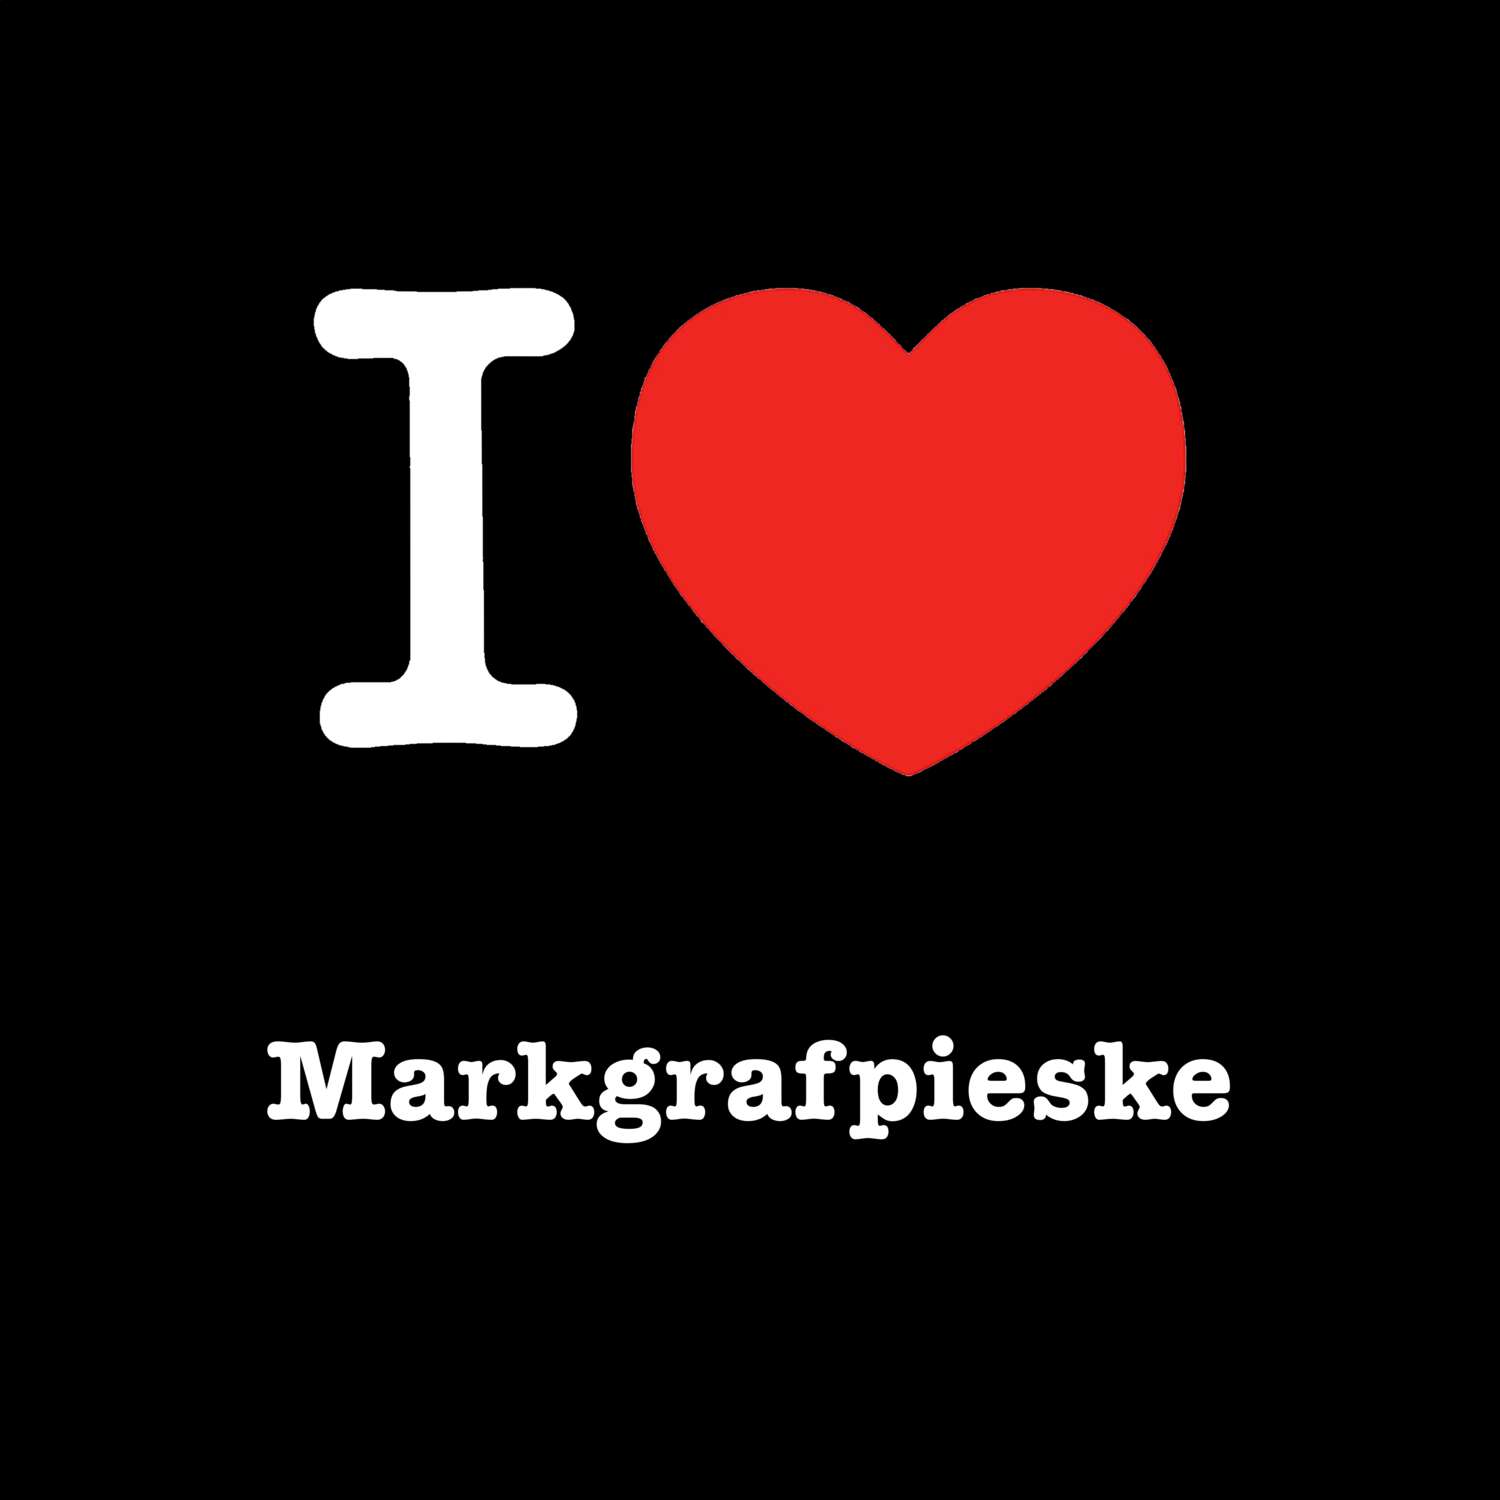 Markgrafpieske T-Shirt »I love«